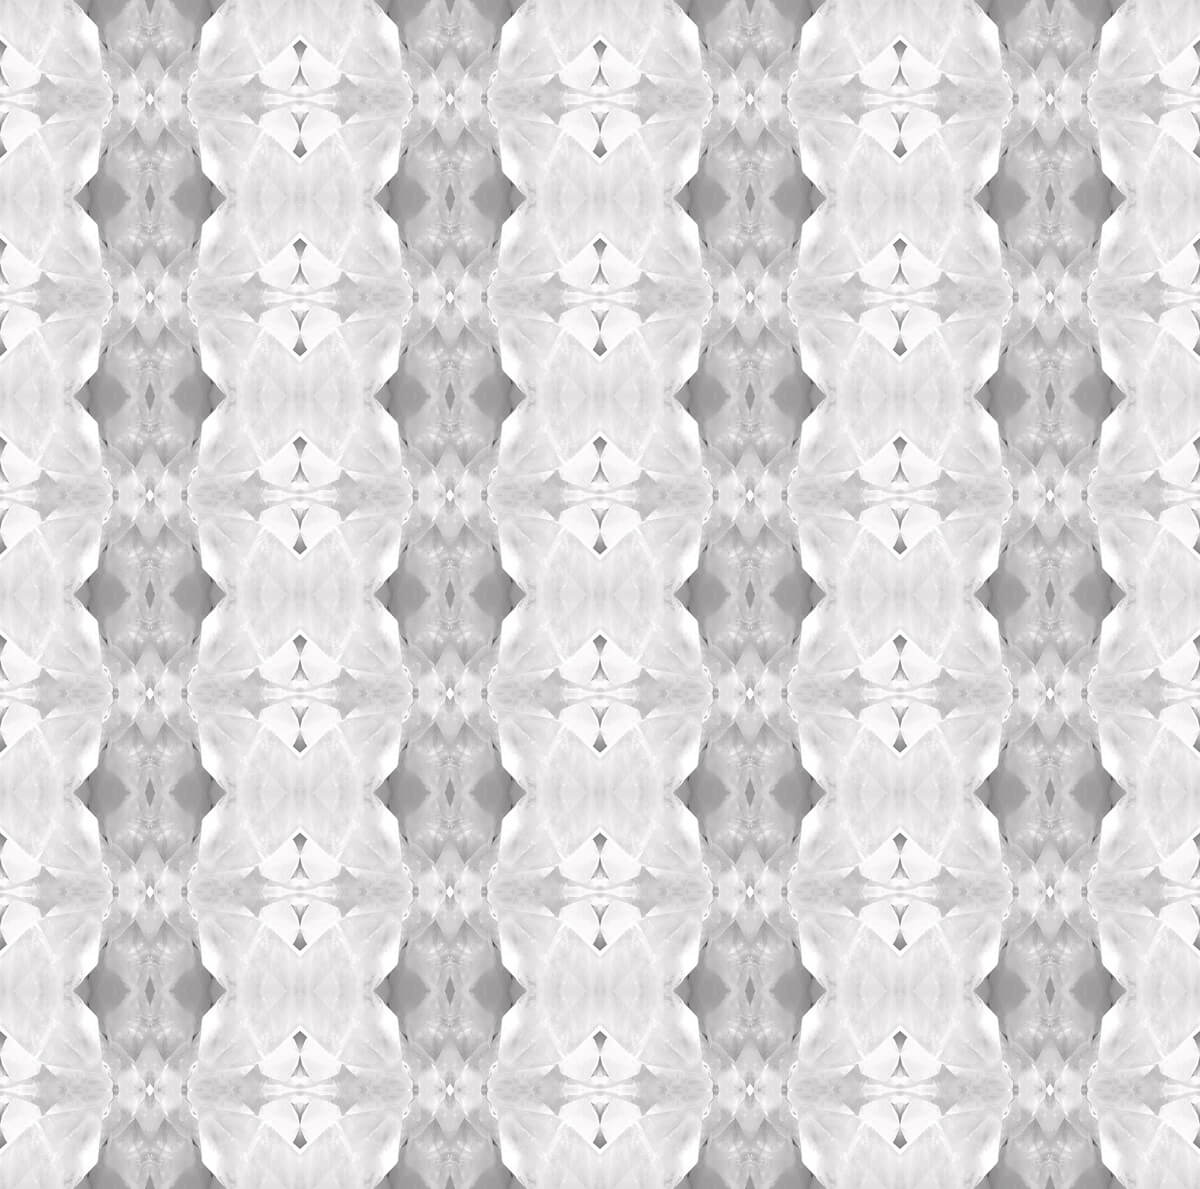 Ghost Quartz pattern in warm gray